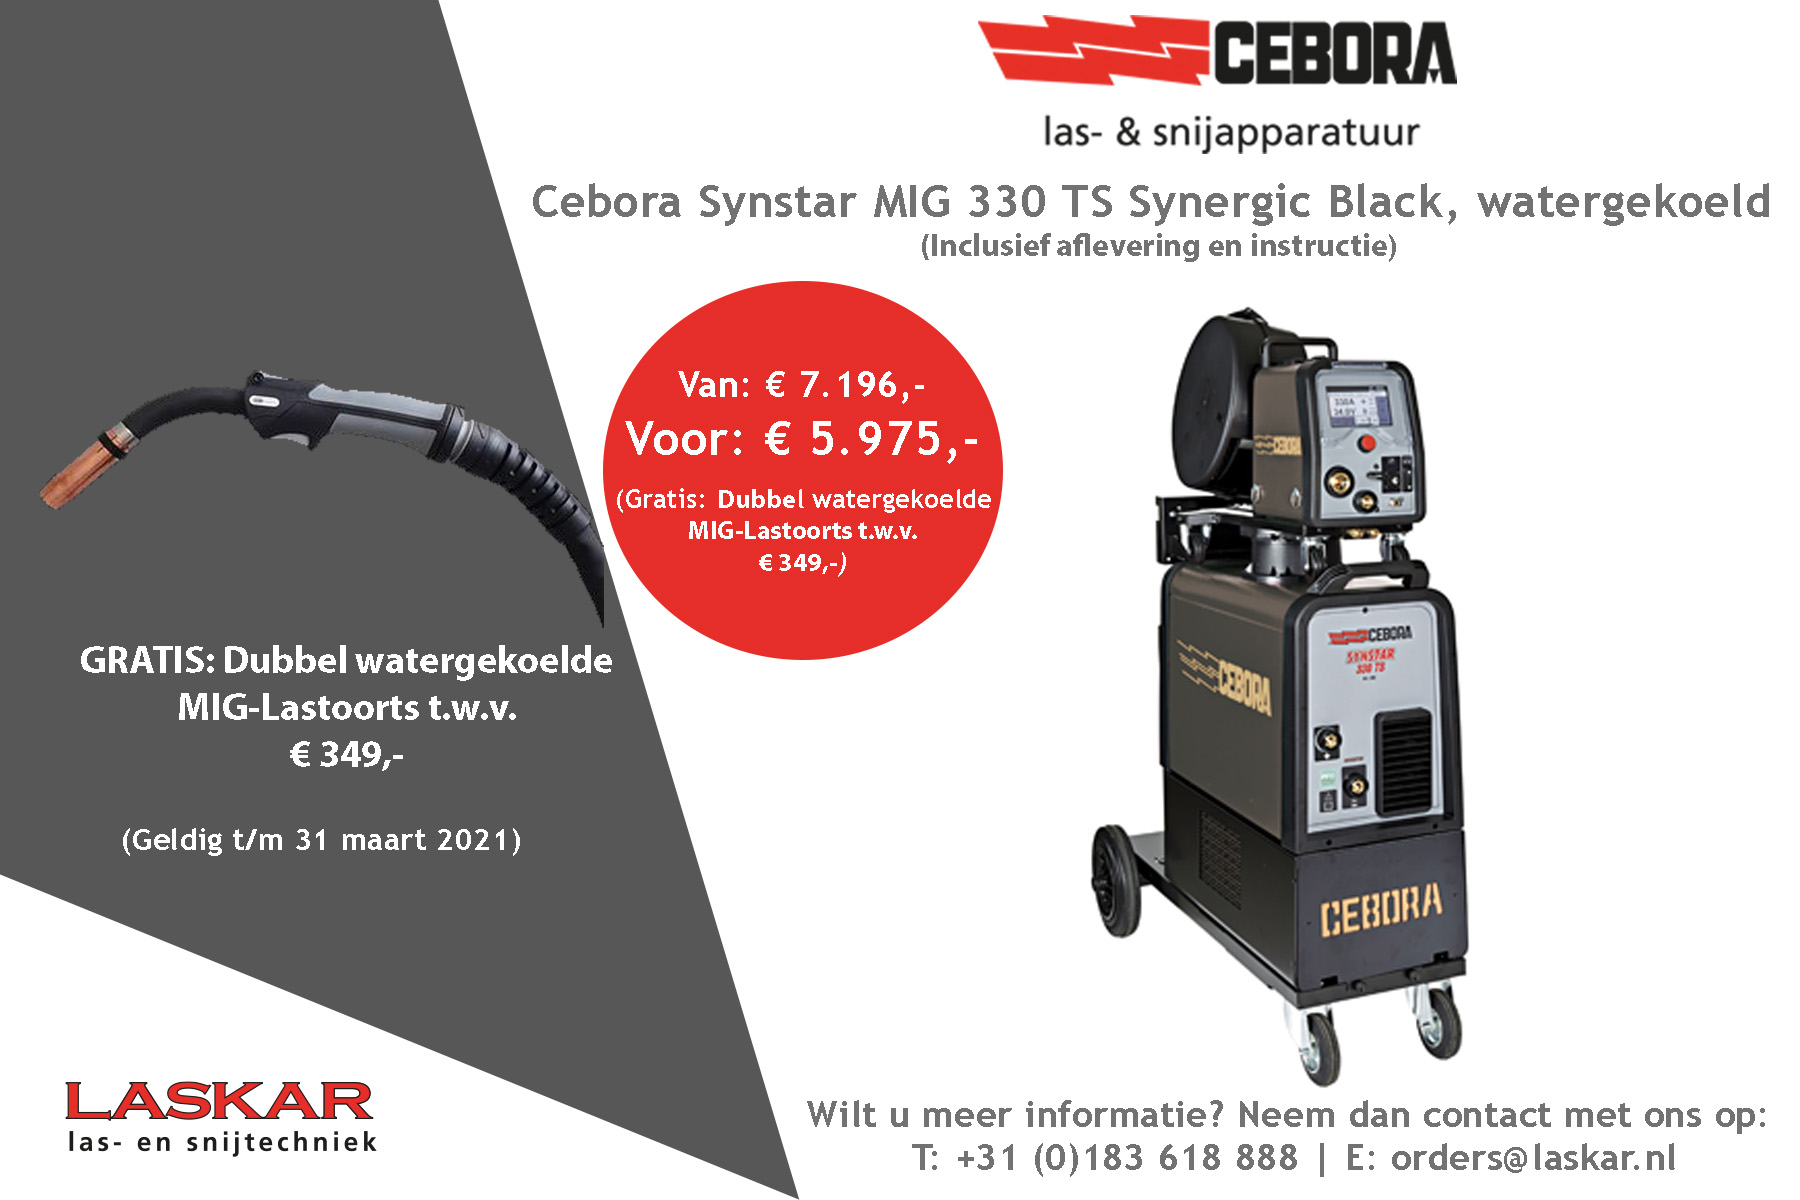 Cebora Synstar MIG 330/TS Synergic Black, watergekoeld!